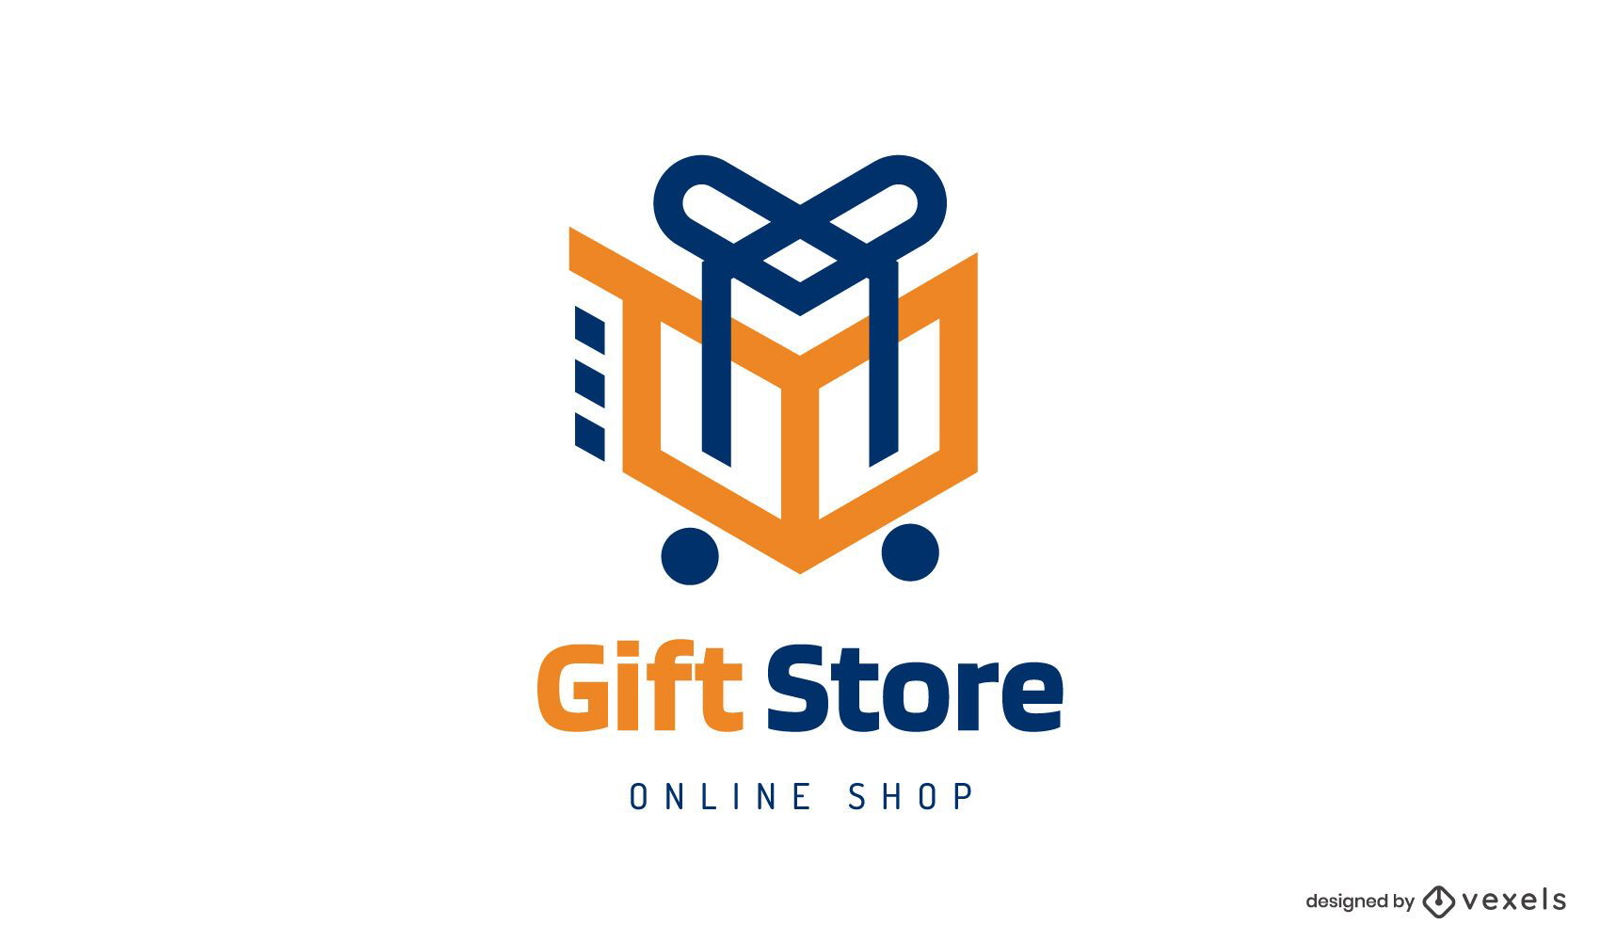 Gift store trolley logo design